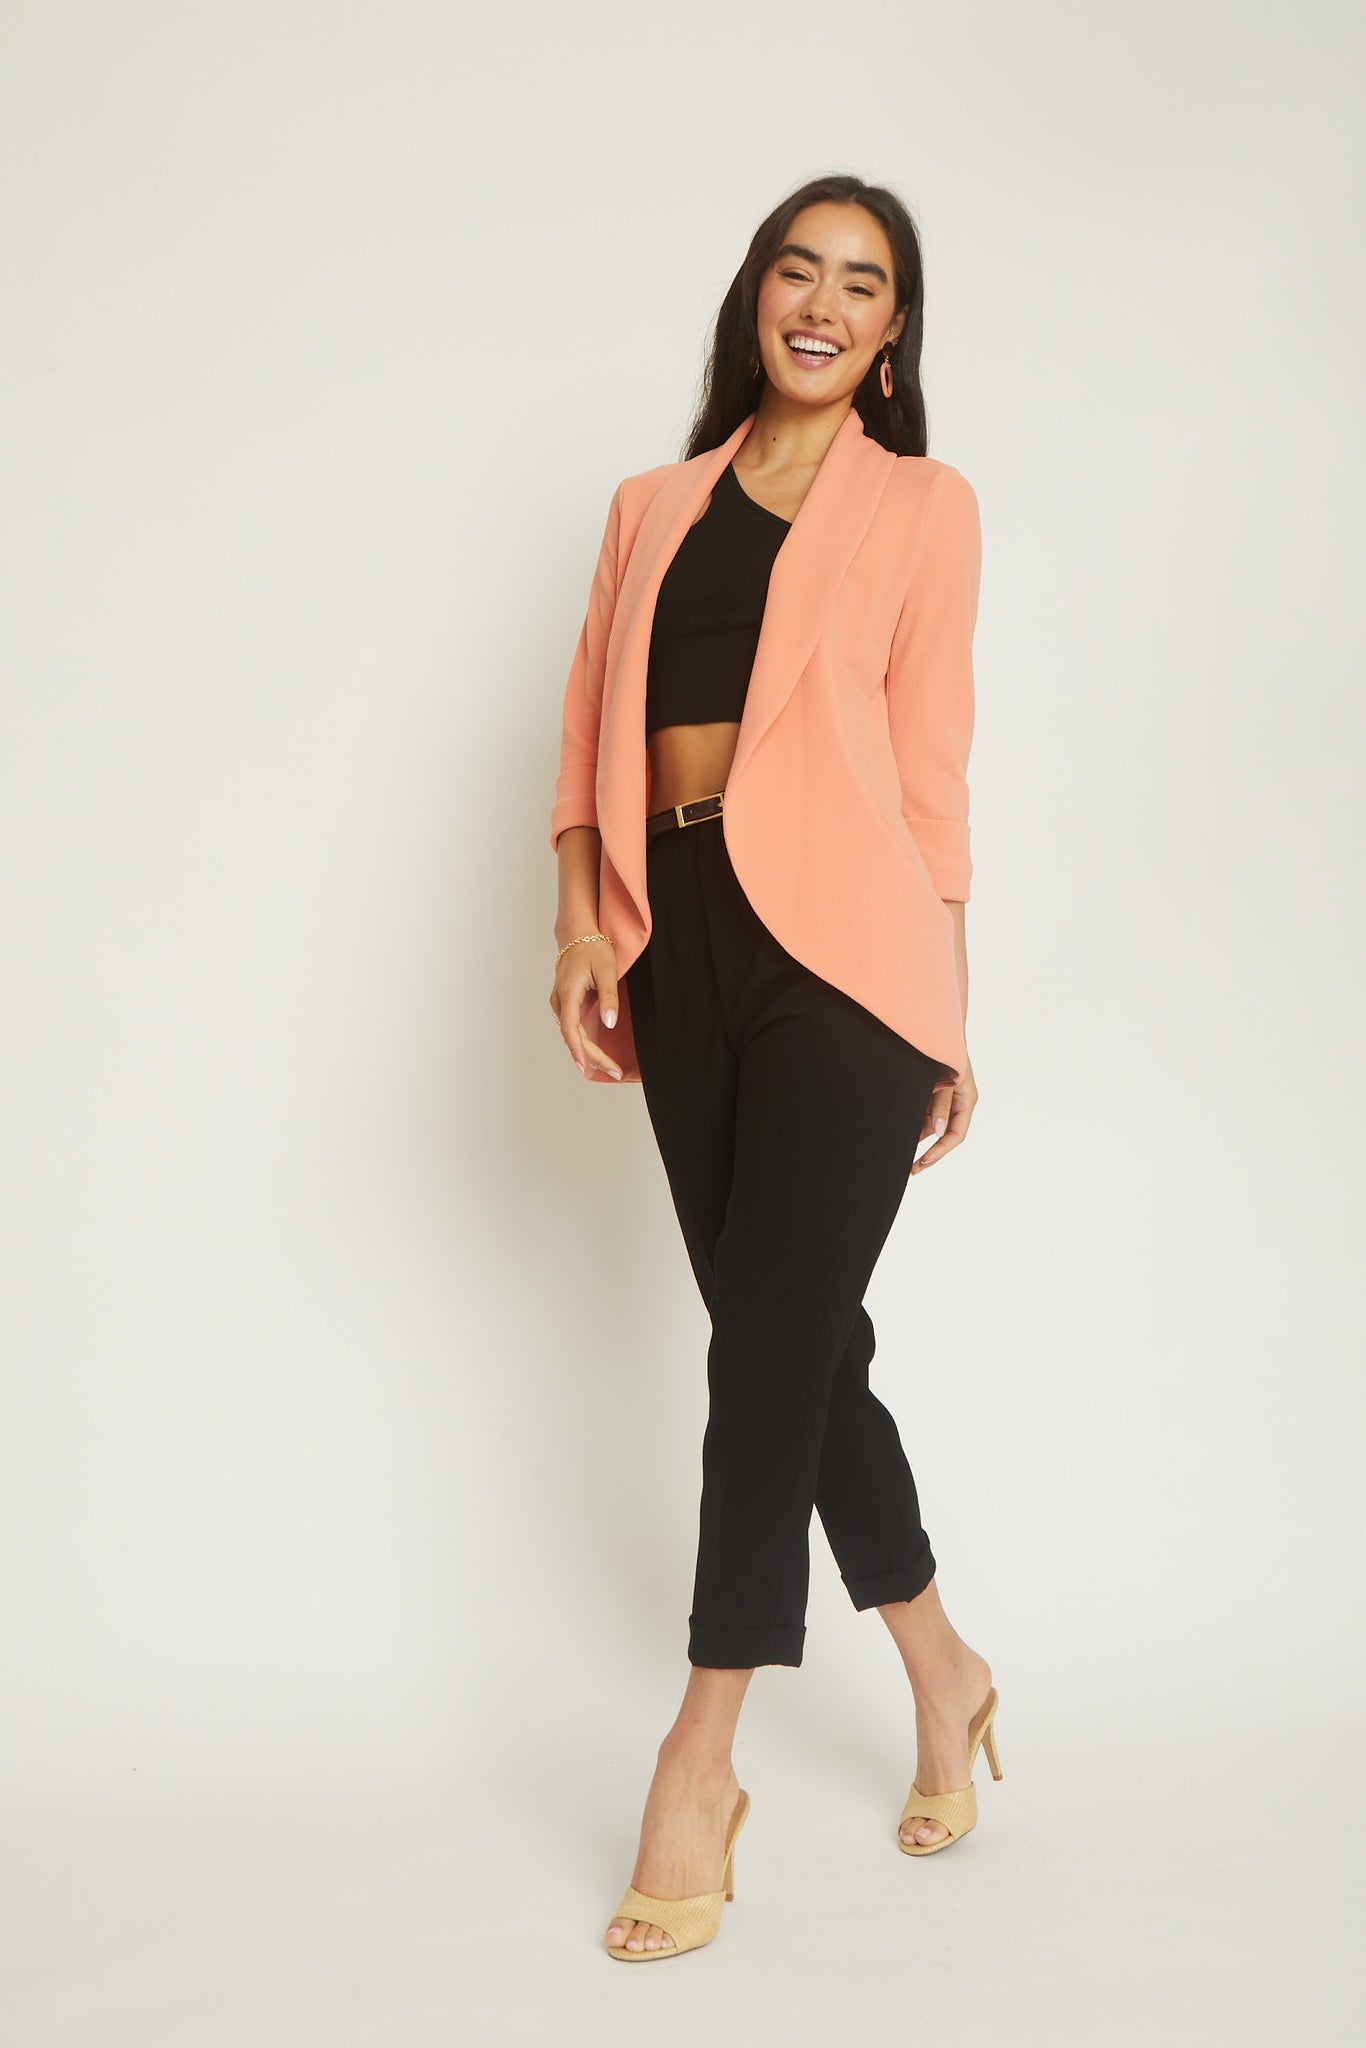 Lightweight Summer Fabric Classic Melanie Shawl Simple Staple Vibrant Coral Pink Orange Color Workwear Blazer Jacket Everyday Shawl Front Pockets Office Wear Best Seller Customer Favorite